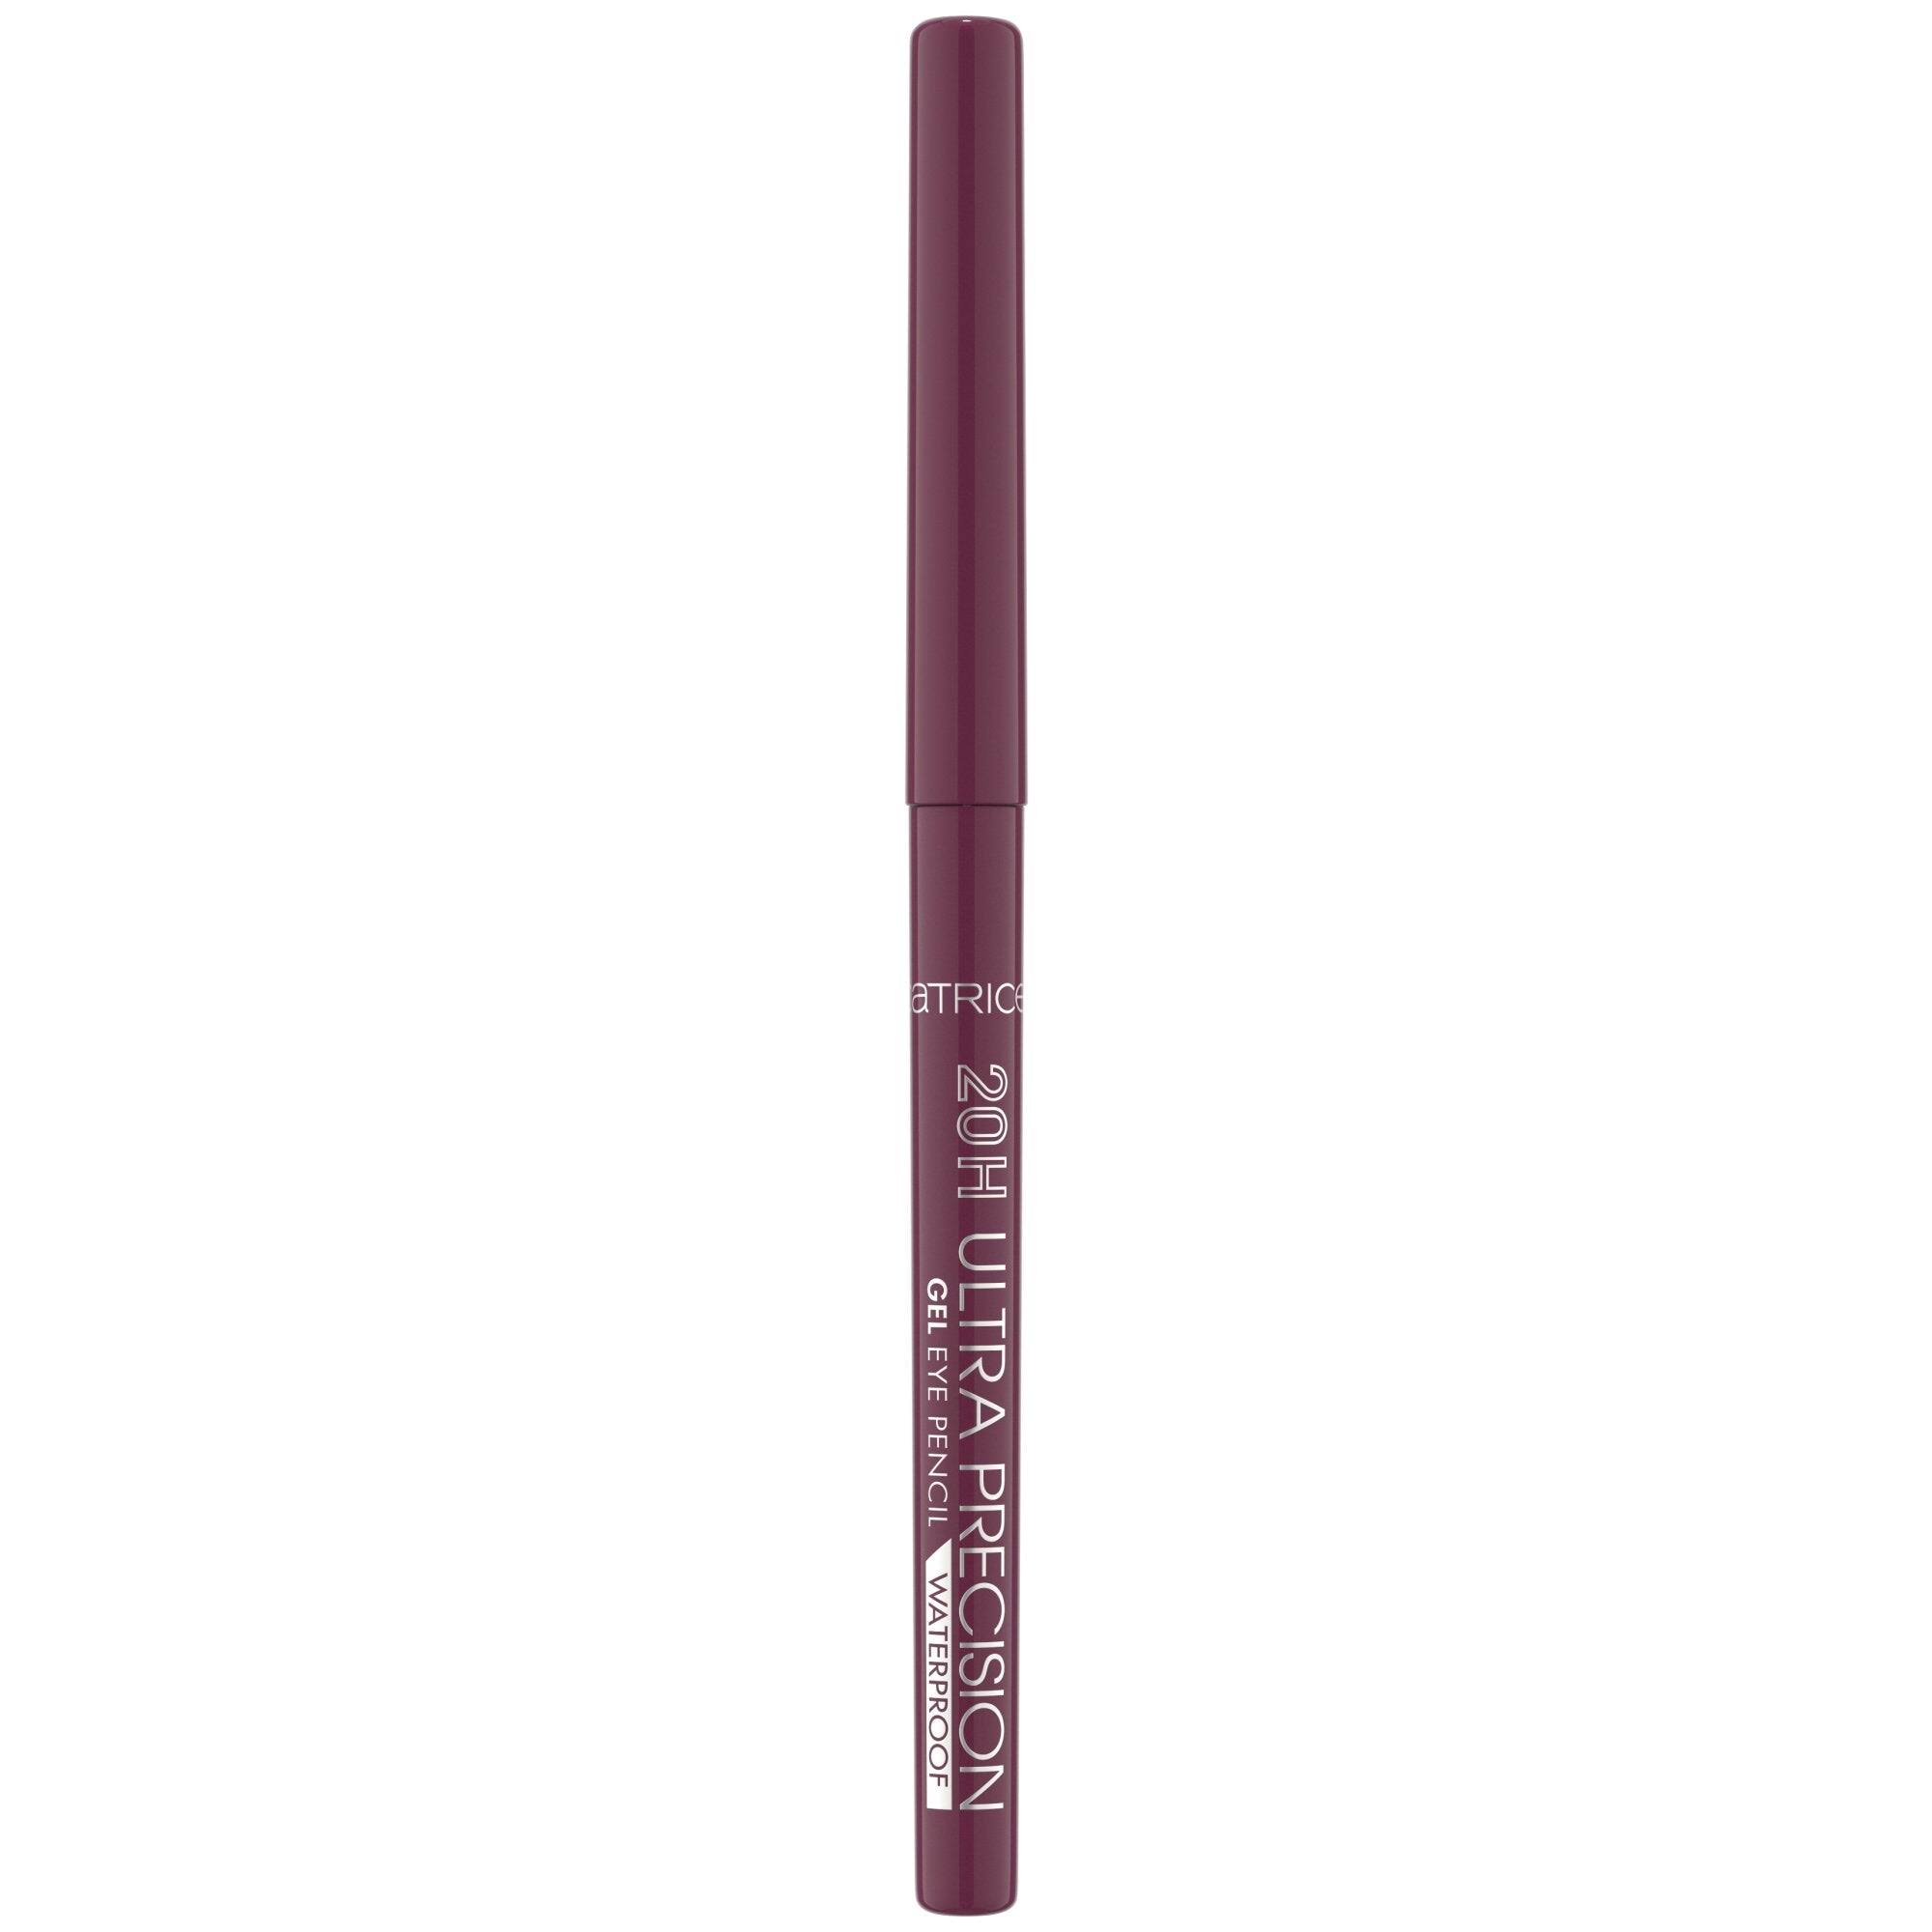 Catrice 20H Ultra Precision Gel Eye Pencil Waterproof Color 080 Berry Plum